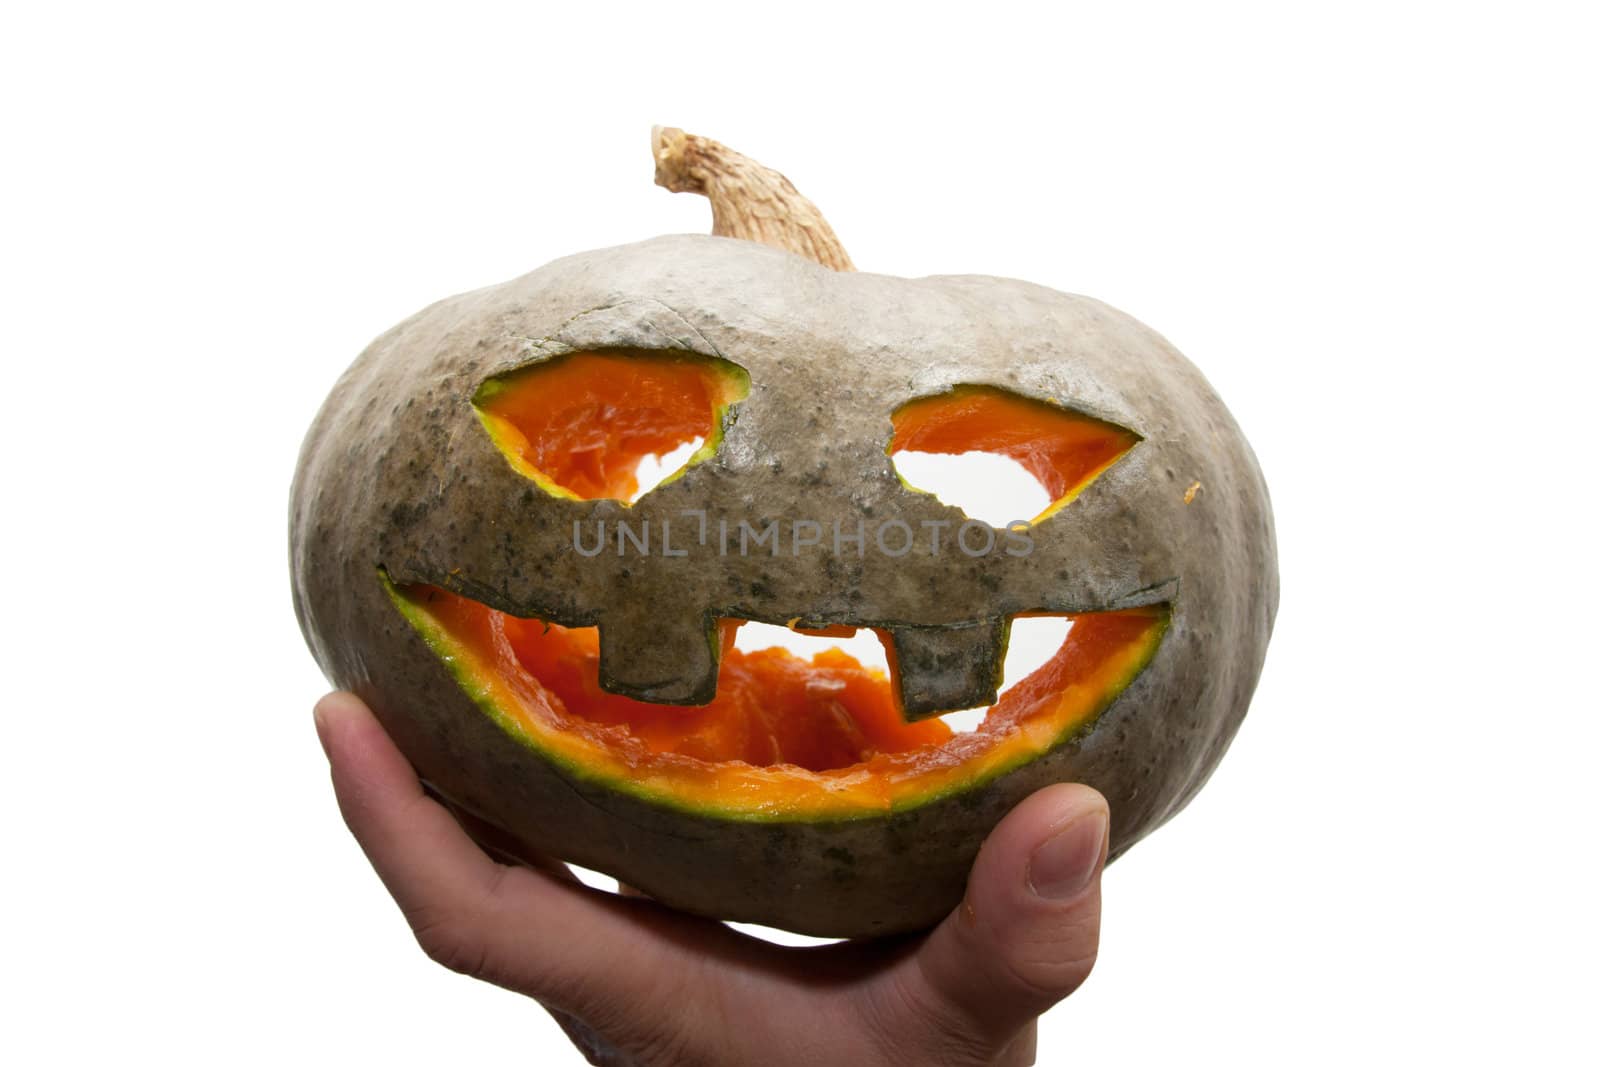  hand holding halloween pumpkin  by schankz